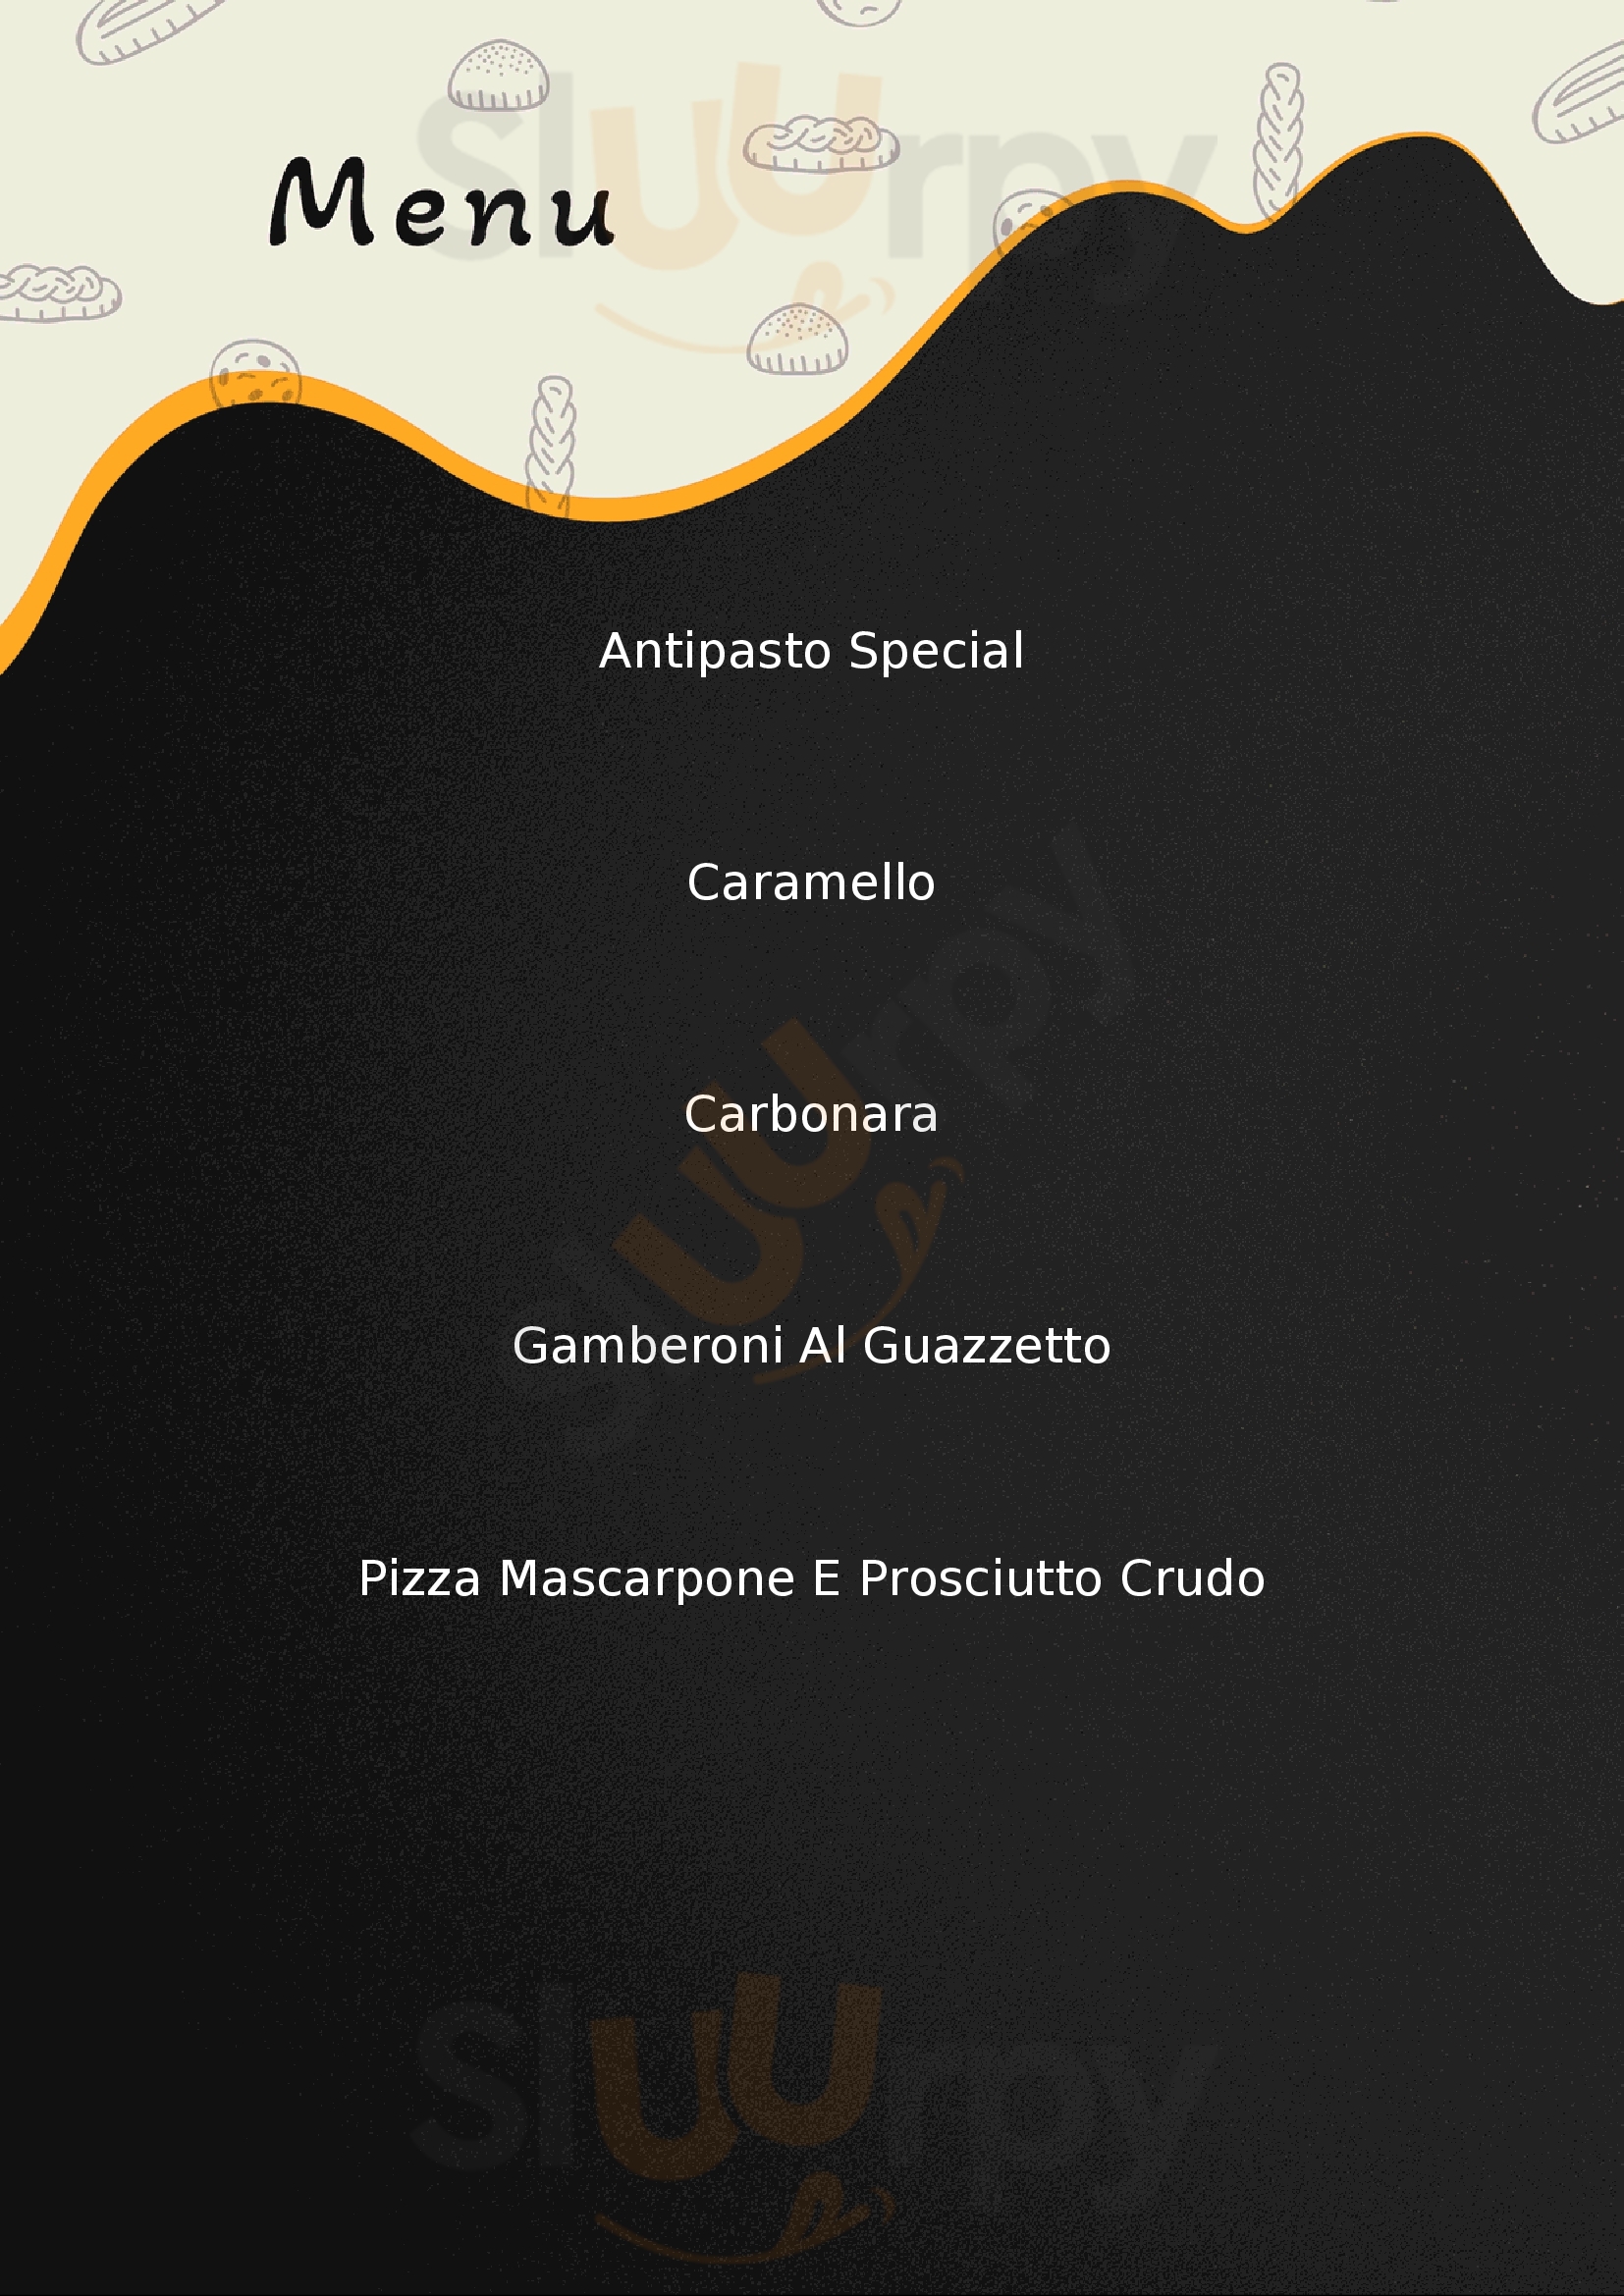 Planet Pizza Montecarlo menù 1 pagina